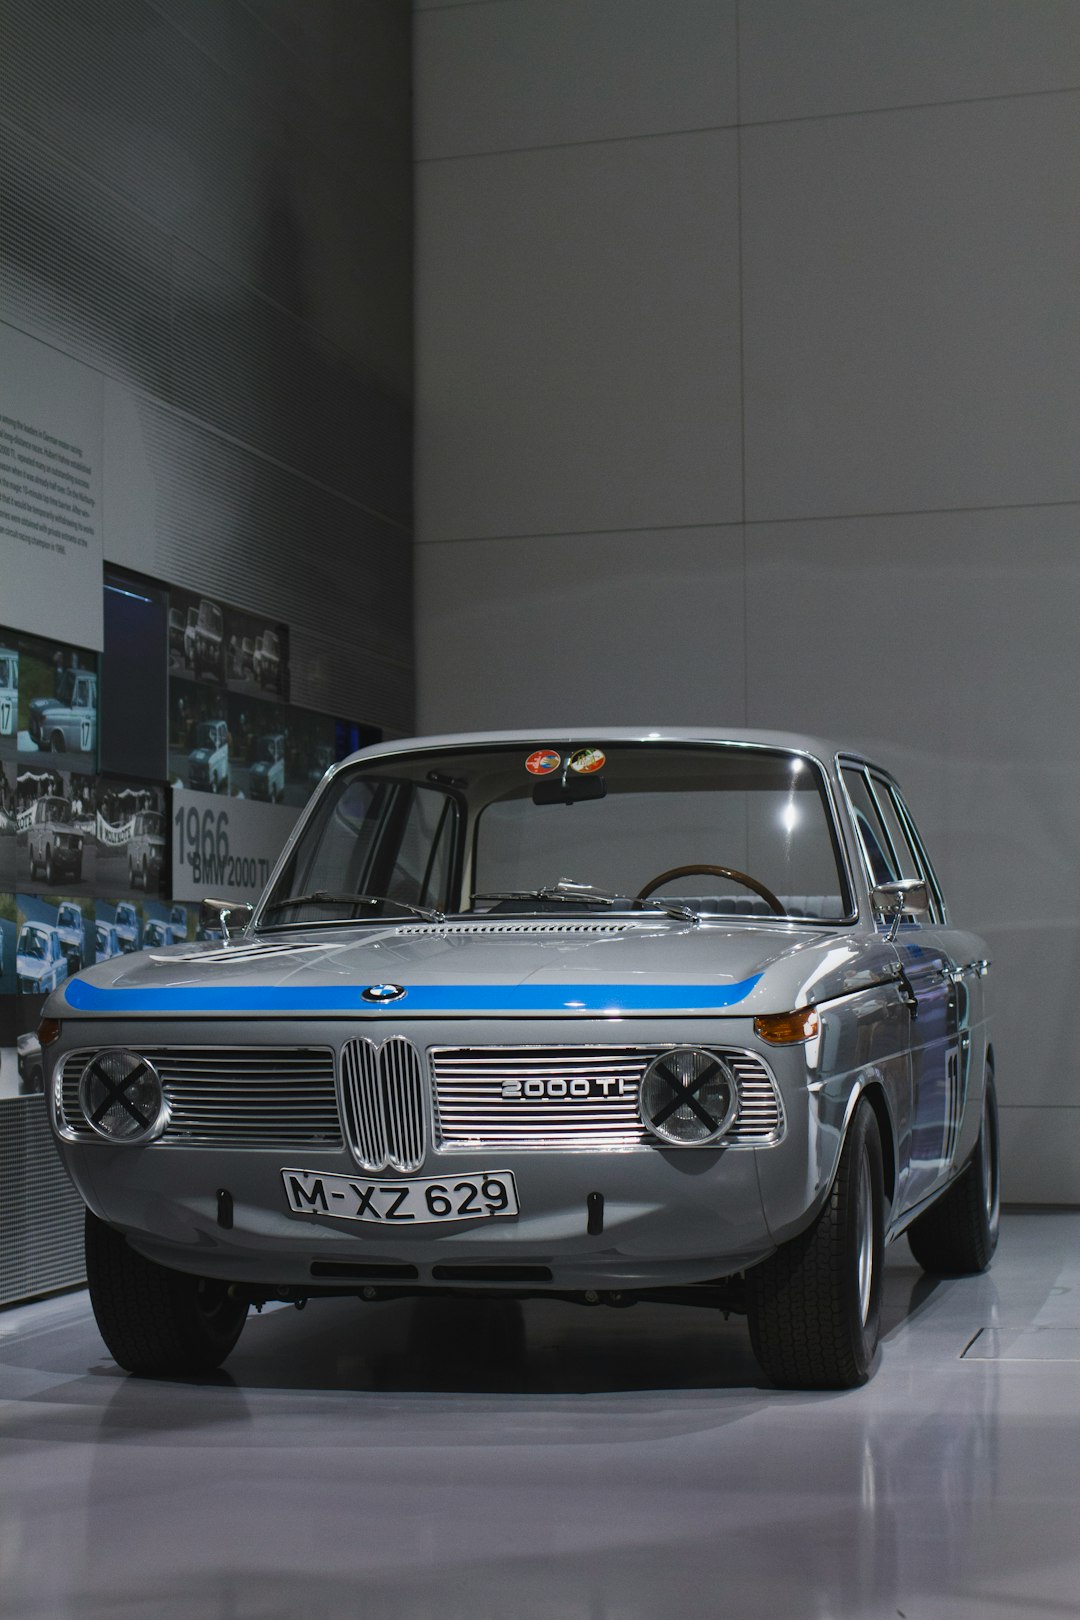 gray BMW sedan on display inside room